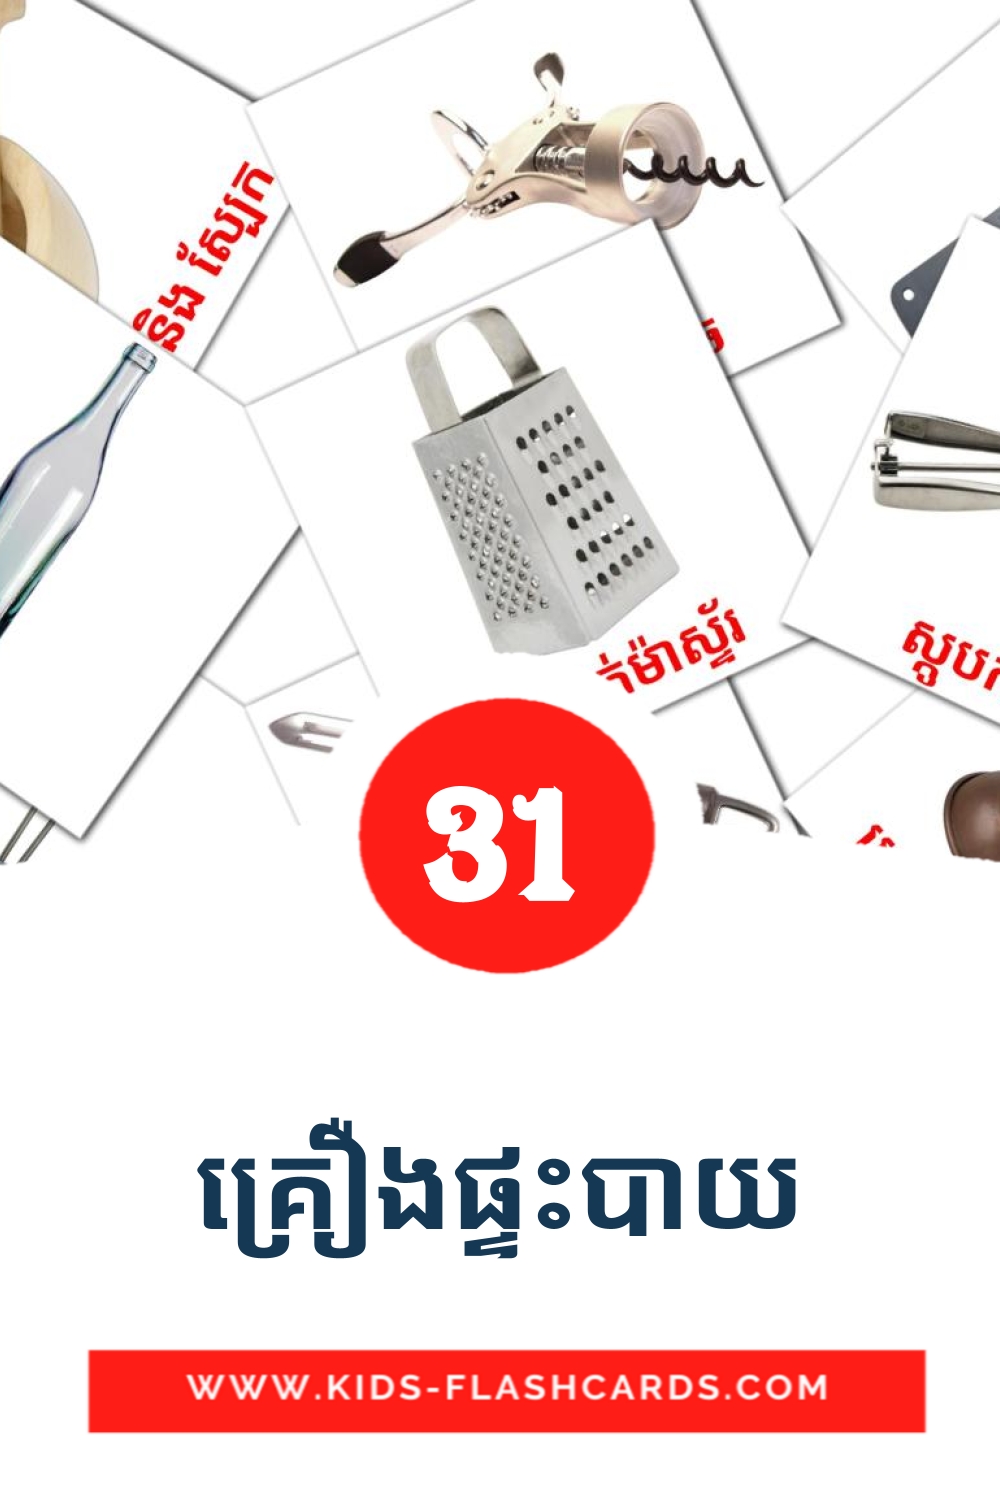 31 tarjetas didacticas de គ្រឿងផ្ទះបាយ para el jardín de infancia en khmer